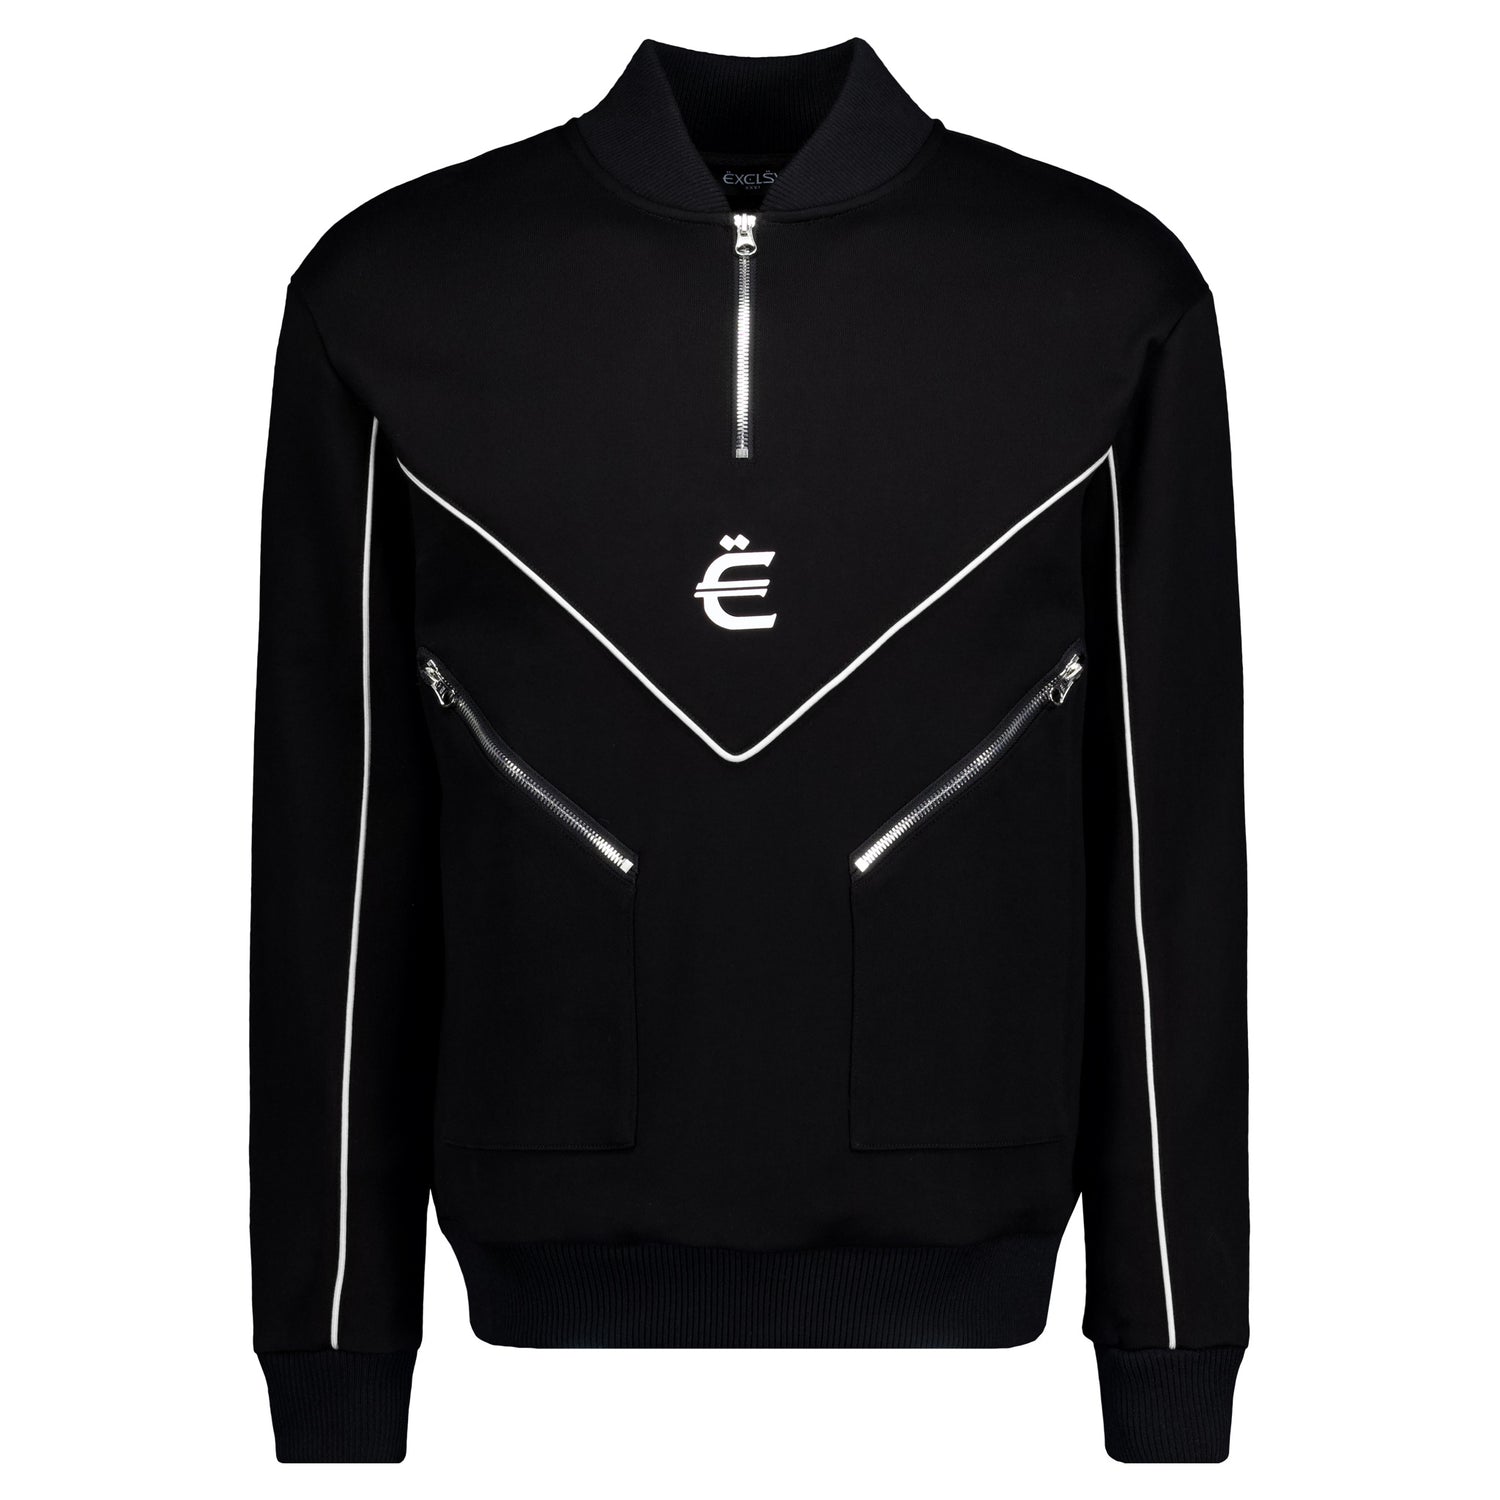 Black & White Strada Half-Zip Sweatshirt - EXCLSV